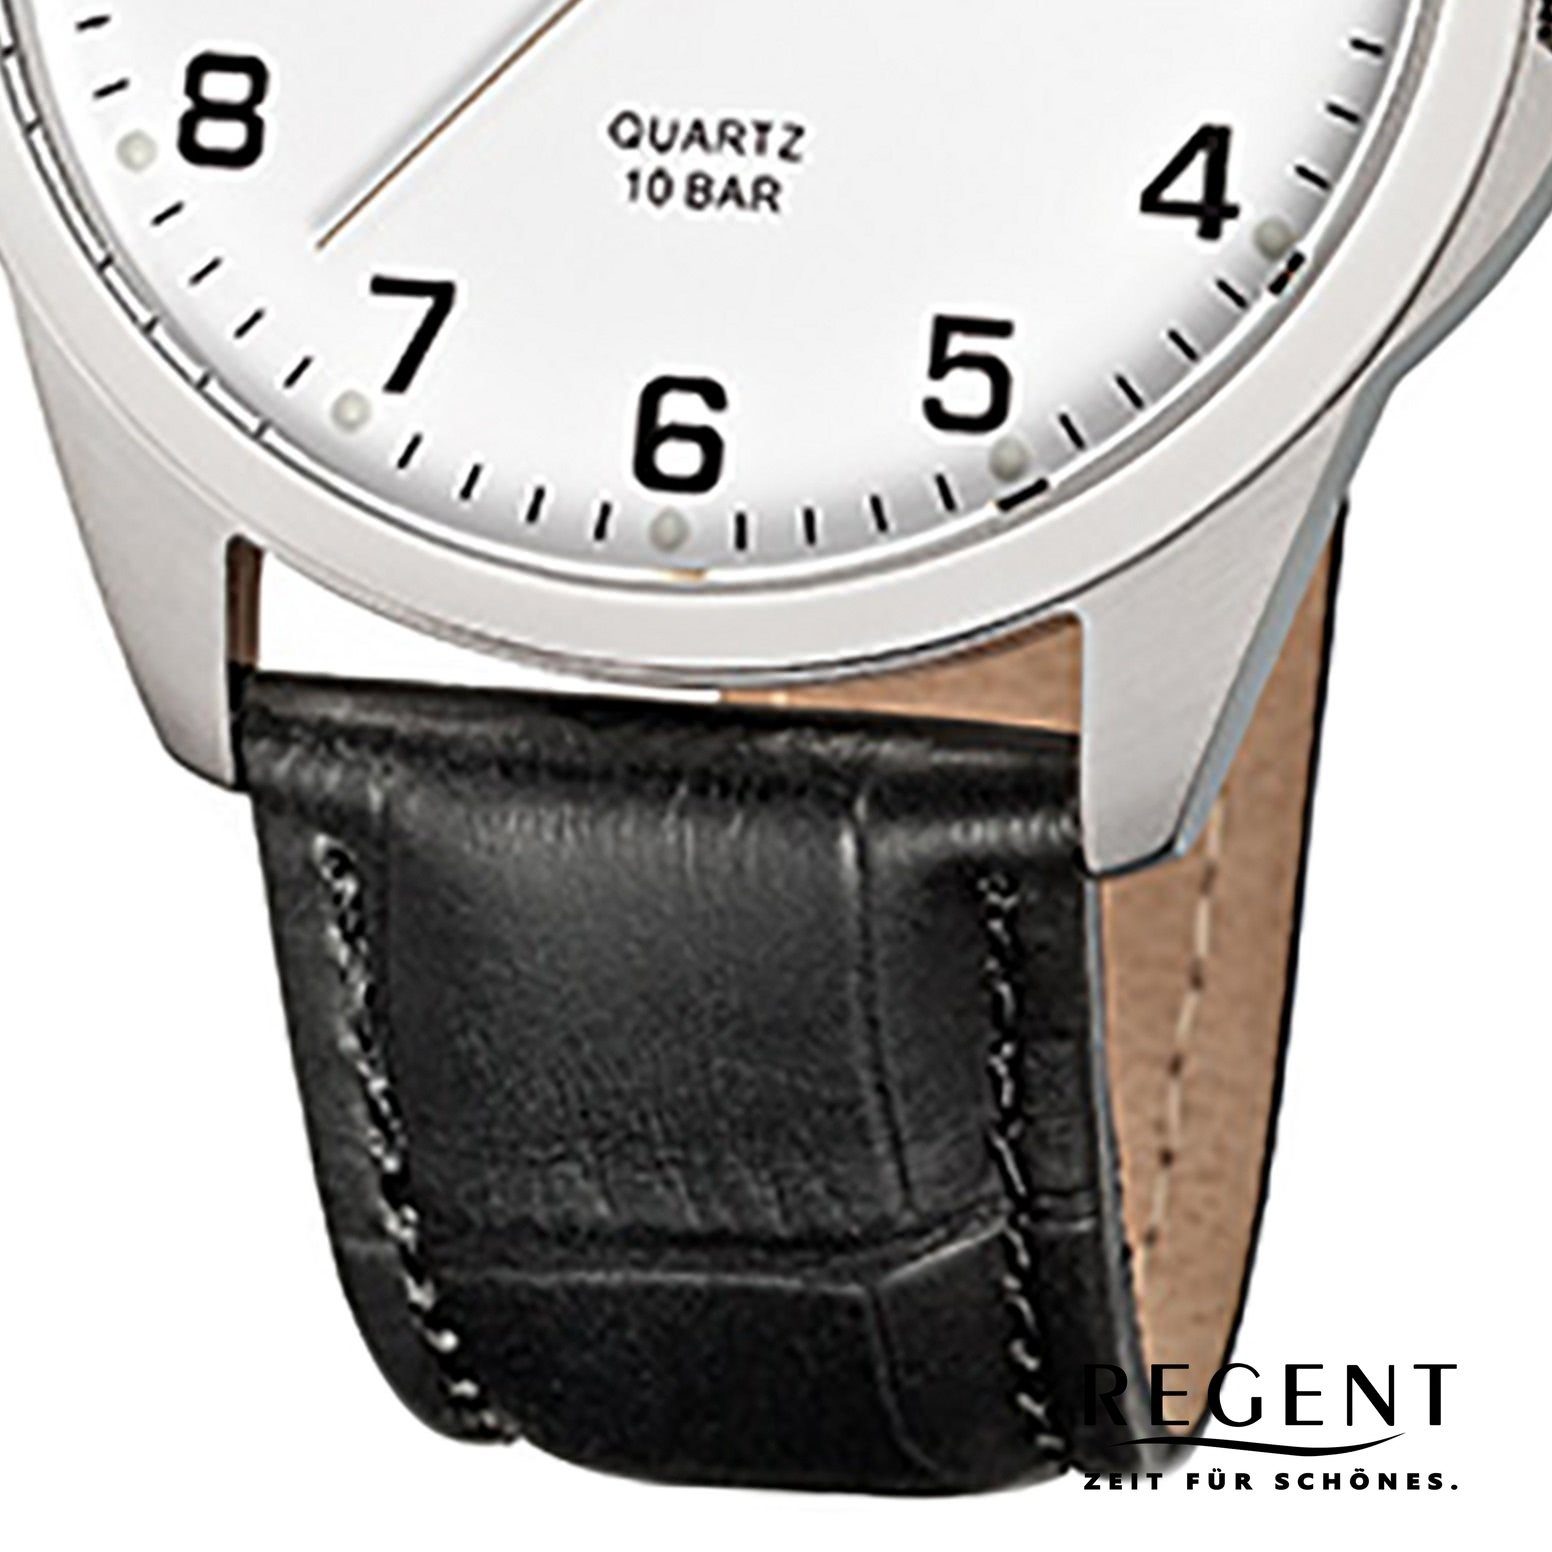 Regent Quarzuhr Herren Armbanduhr mittel Lederarmband rund, schwarz 39mm), Analog, Regent (ca. Herren-Armbanduhr